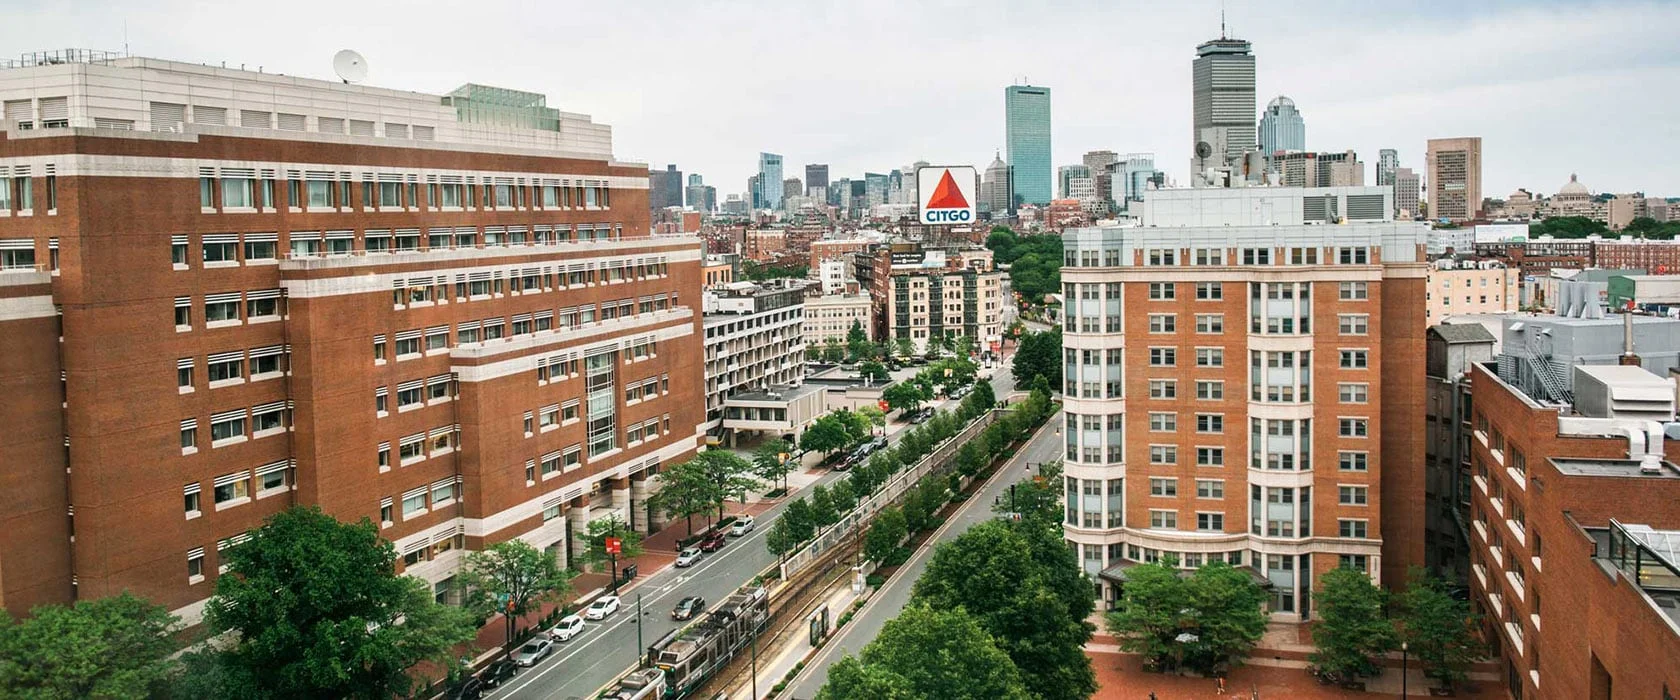 Aerial shot of Boston University campus